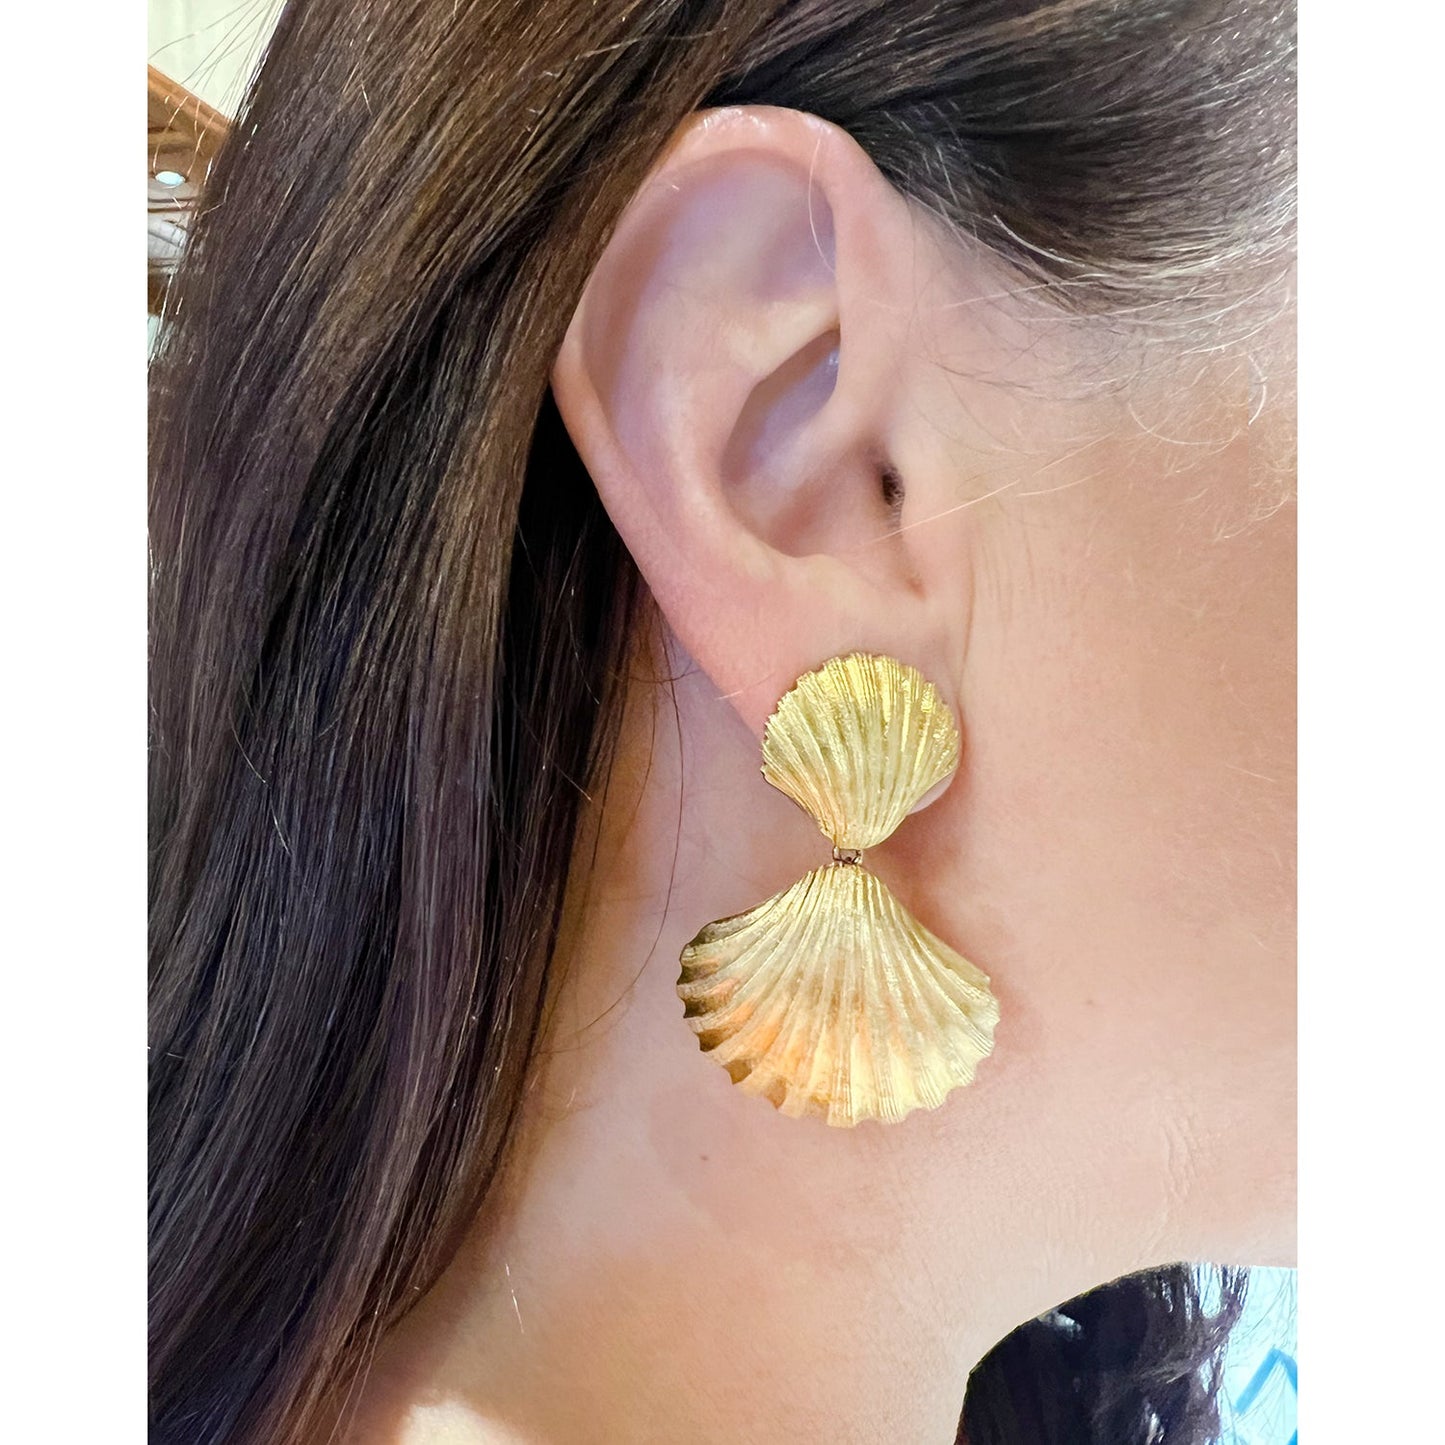 Buccellati - Estate 18k Yellow Gold Shell Drop Earrings